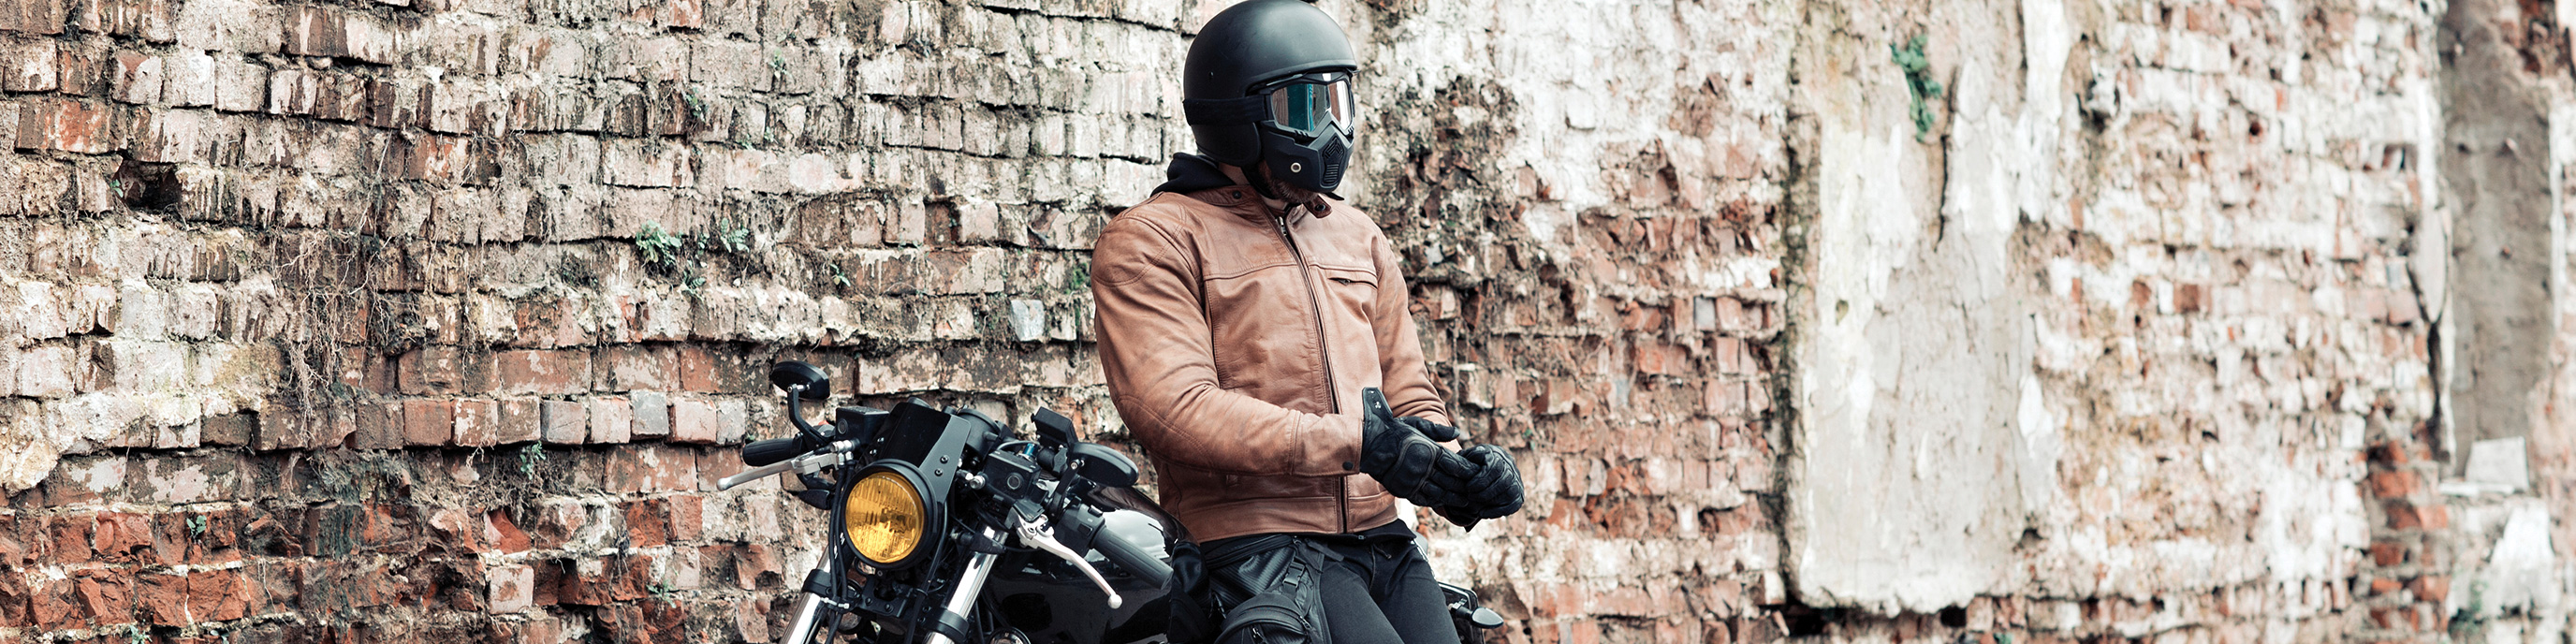 Comment entretenir un casque de moto ? - Liberty Rider